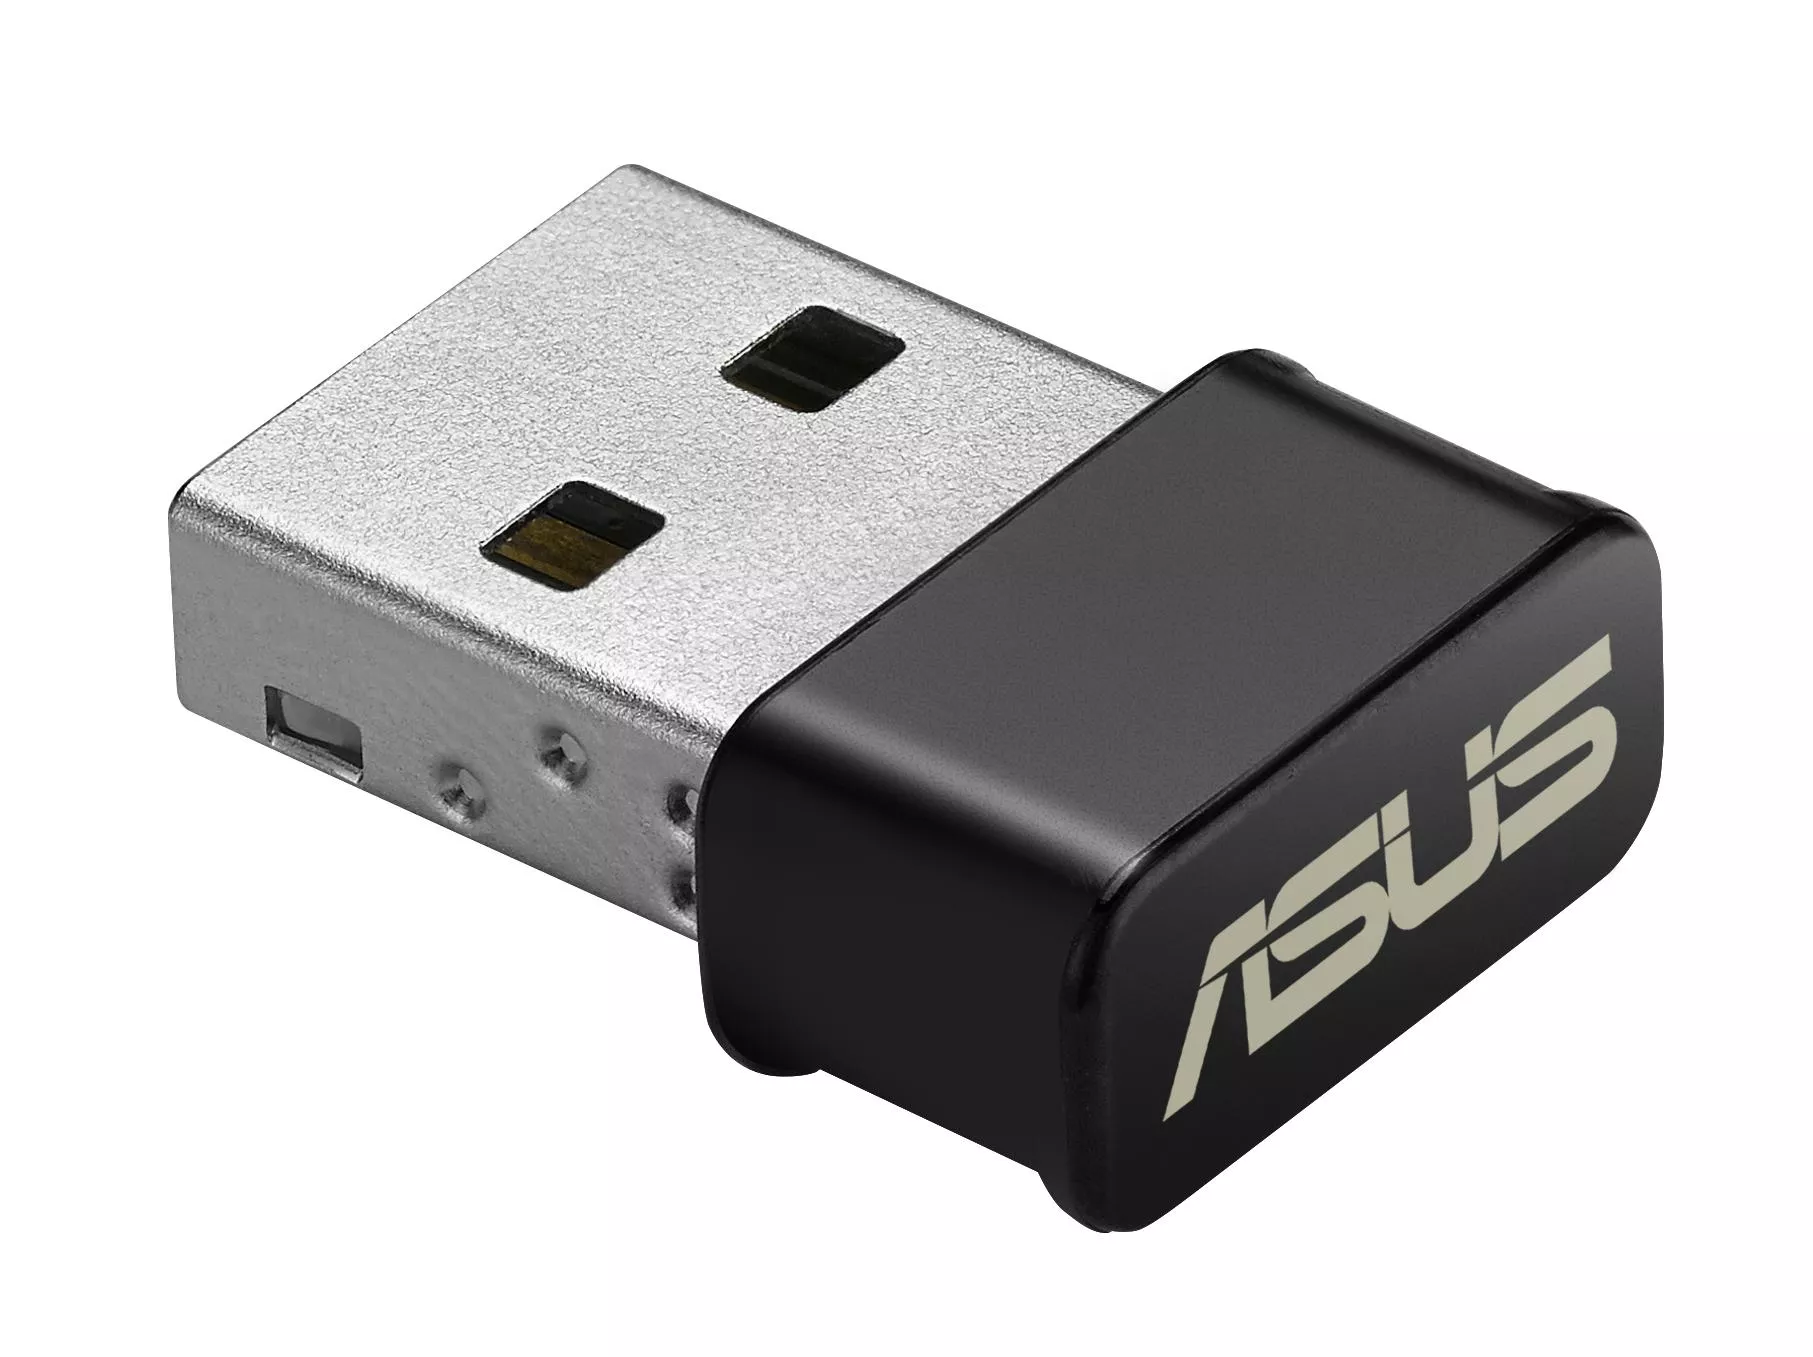 Revendeur officiel ASUS USB-AC53 Nano